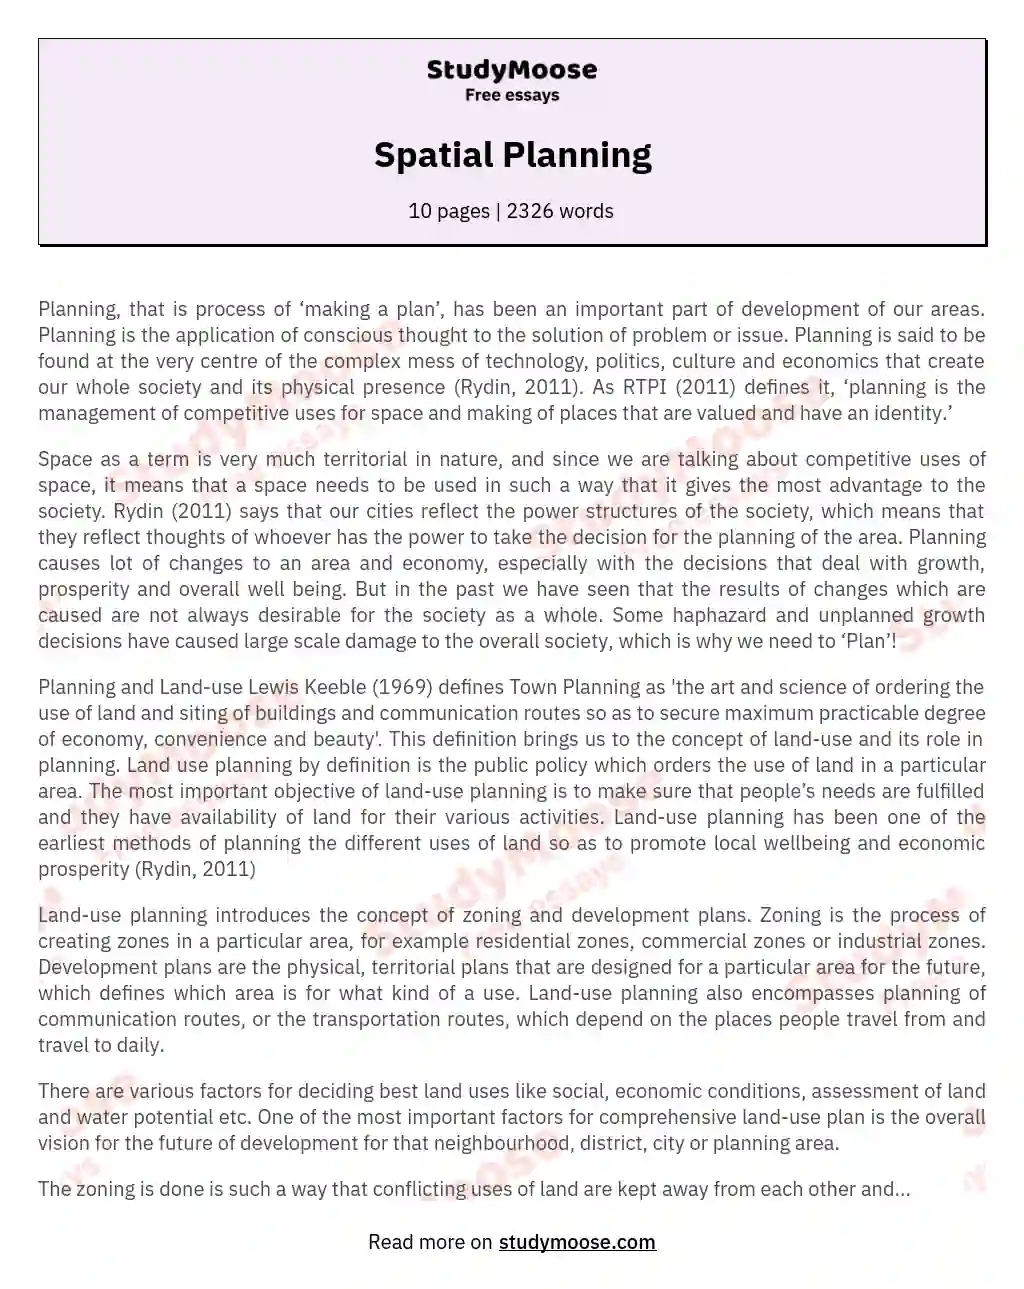 Spatial Planning essay